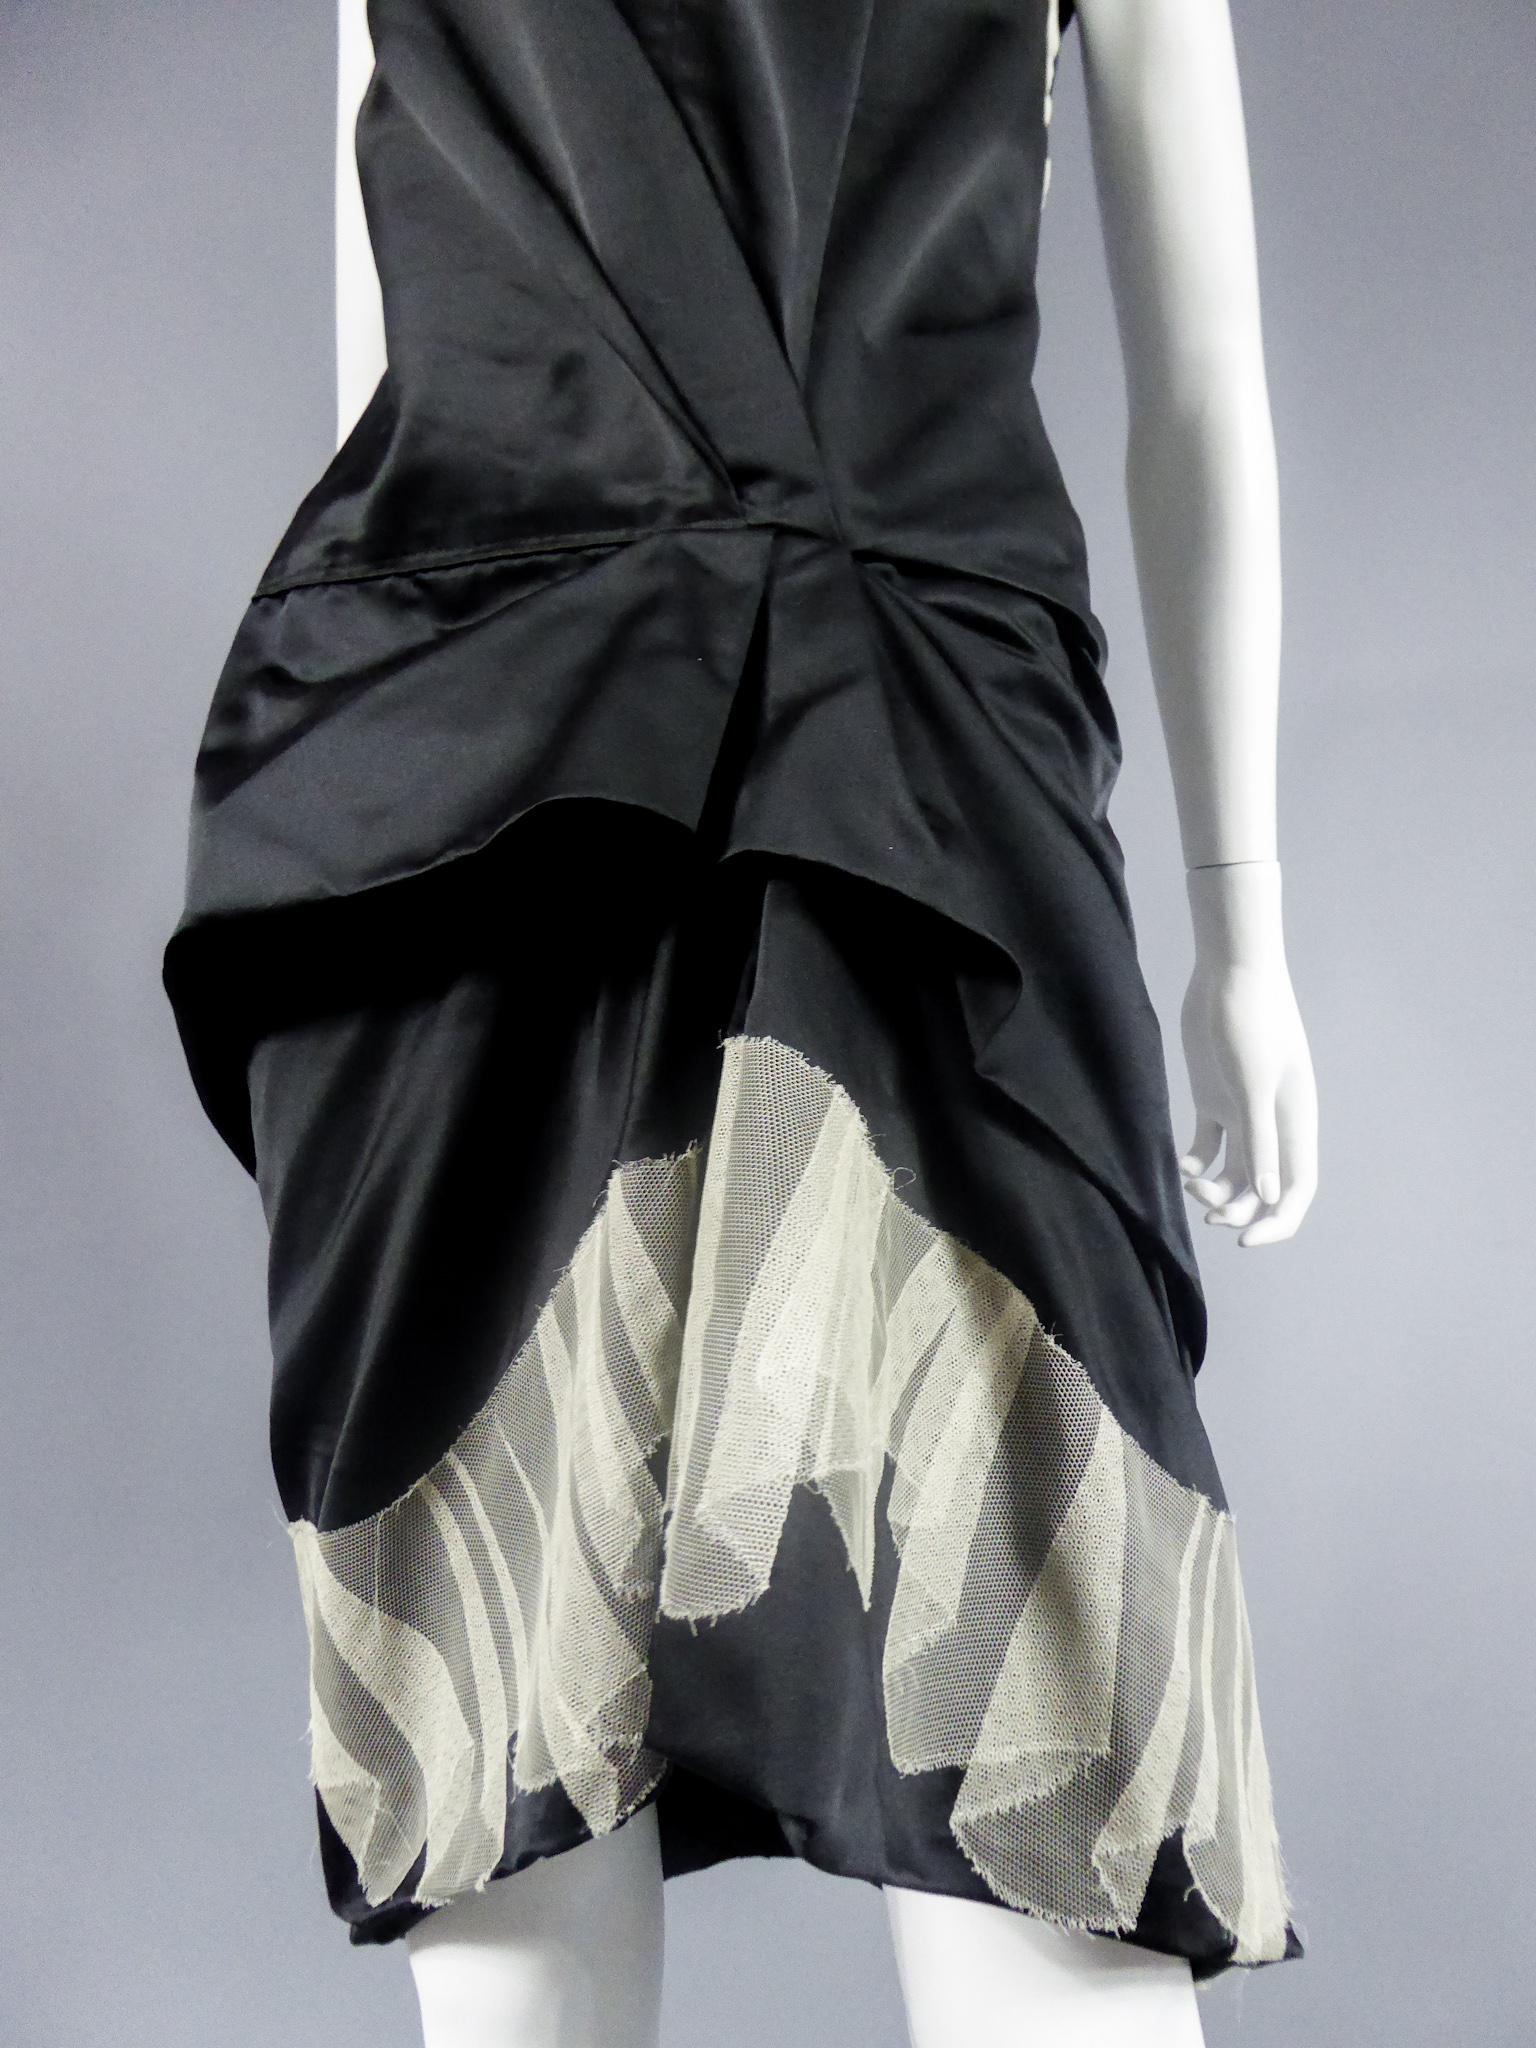 Marc Jacobs black waxed satin Dress, circa 2000 For Sale 5